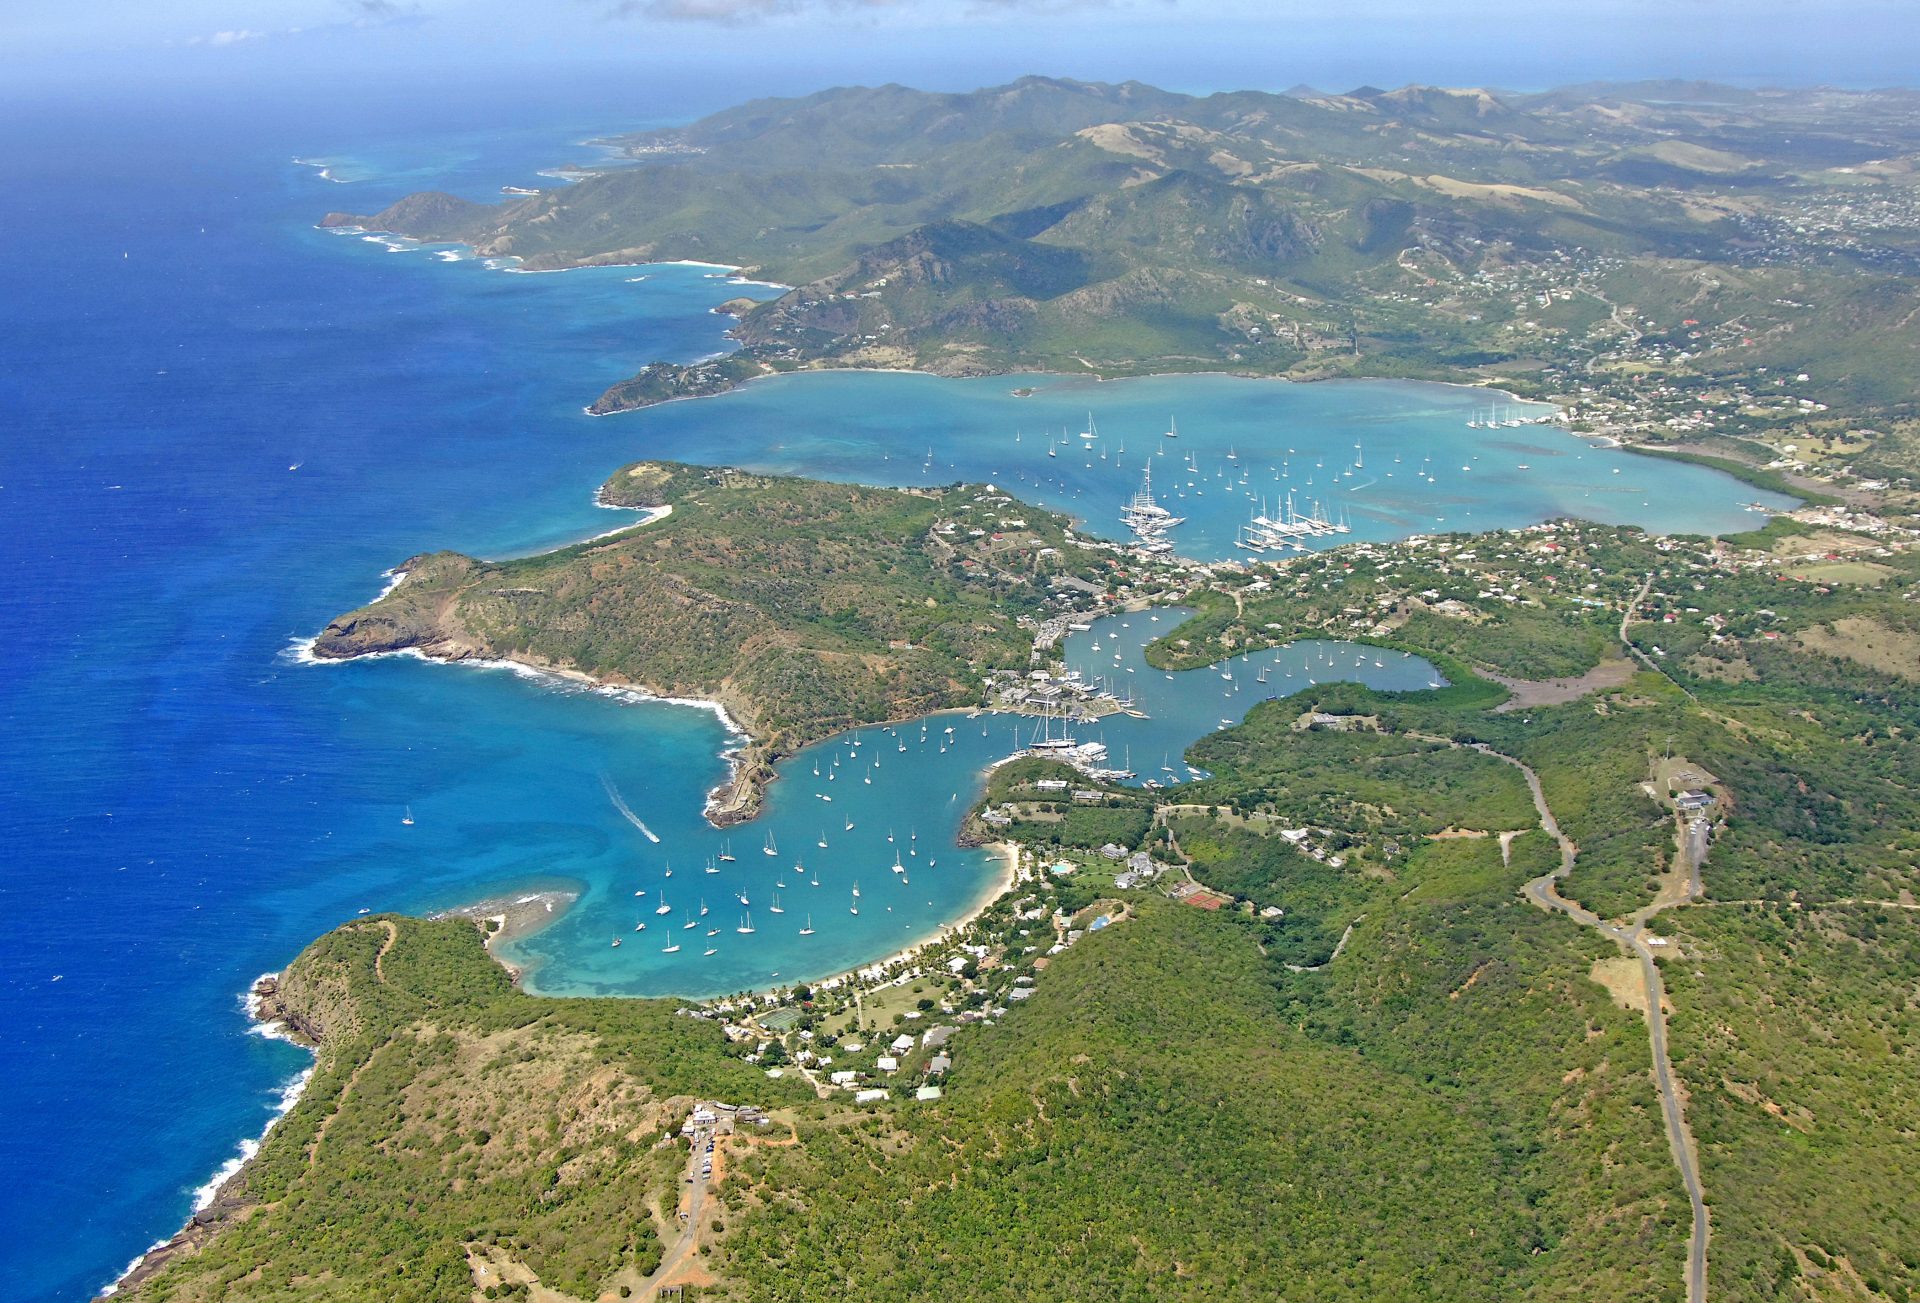 Antigua During the Caribbean Season